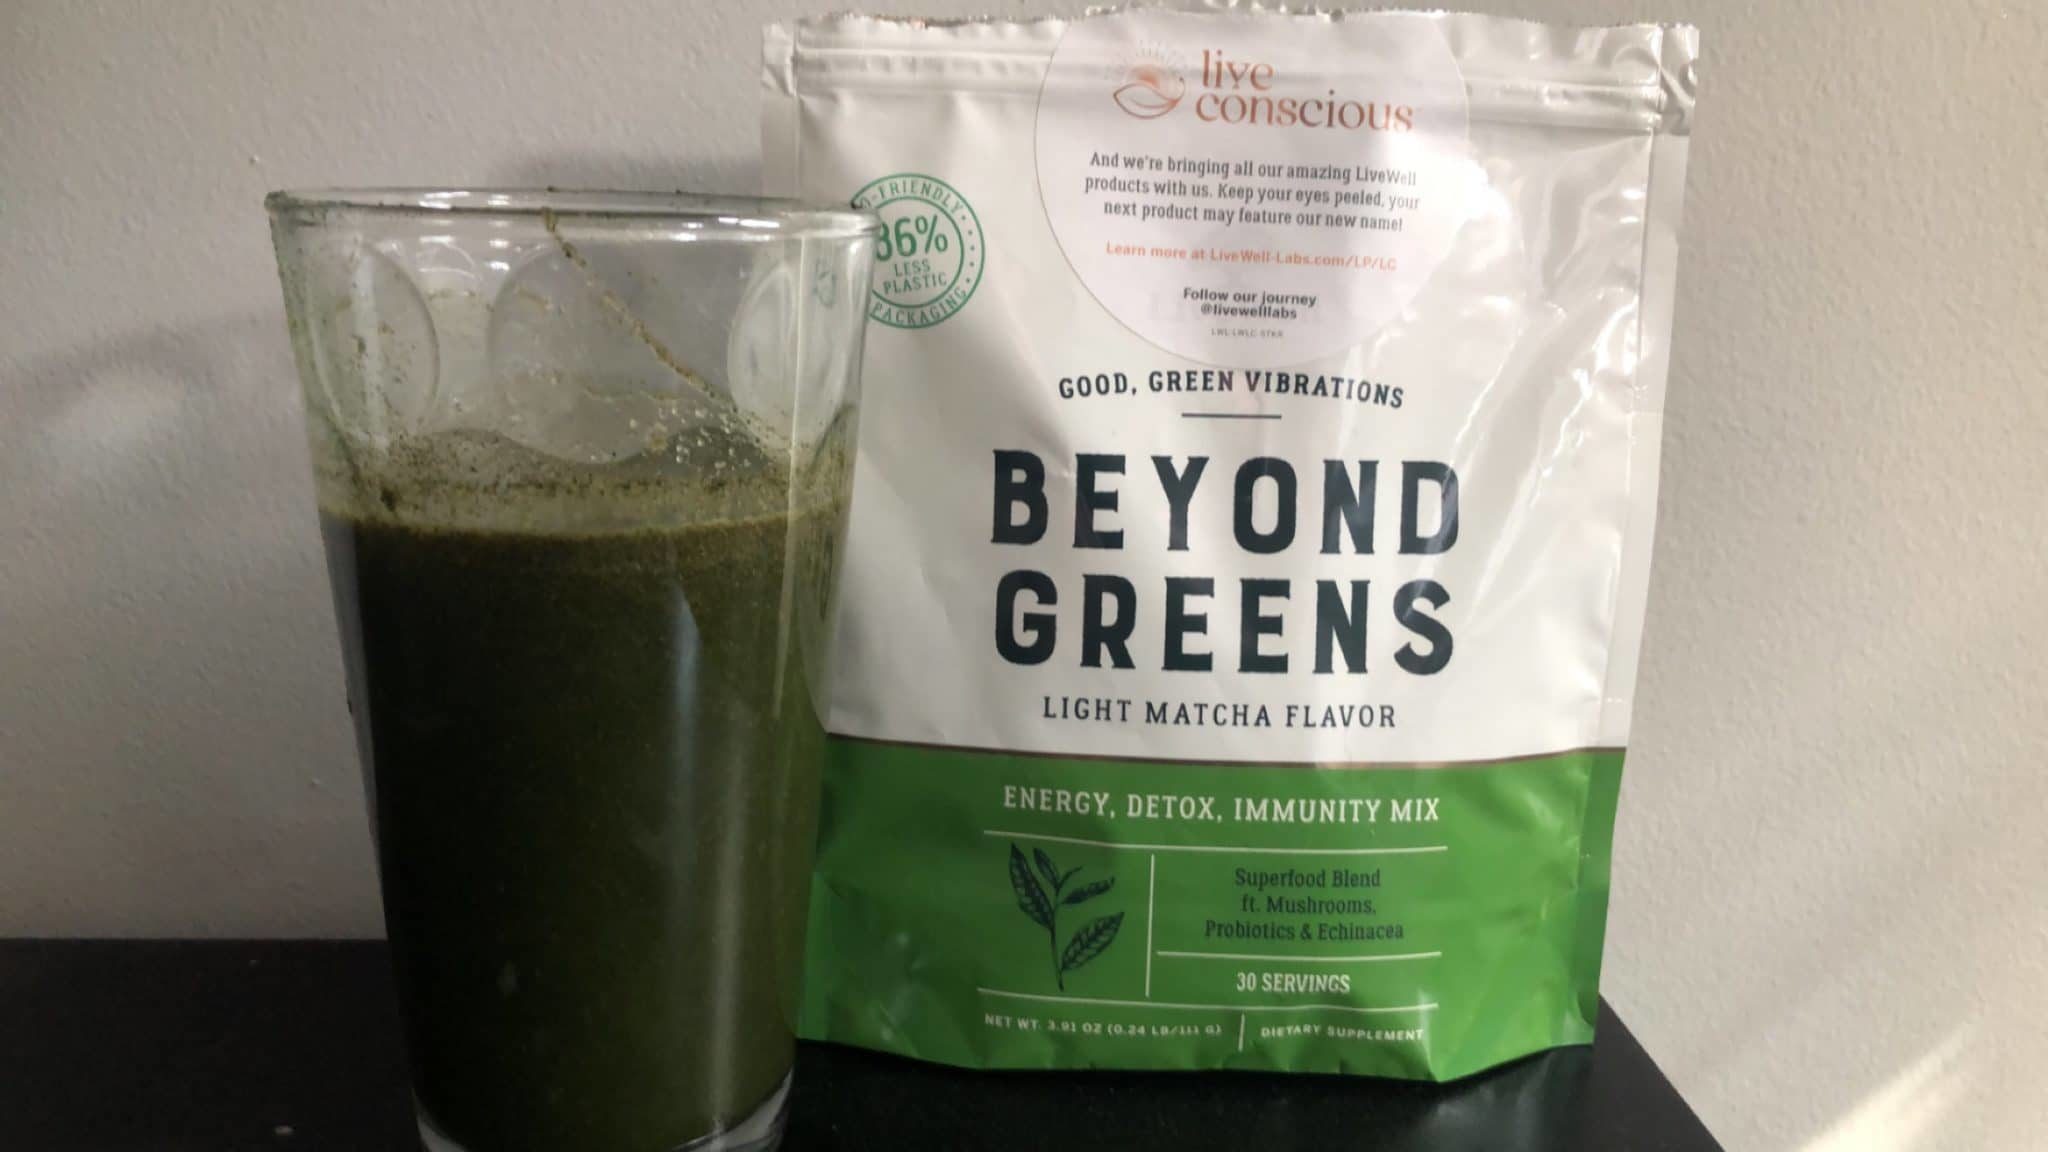 Beyond Greens bag and drink